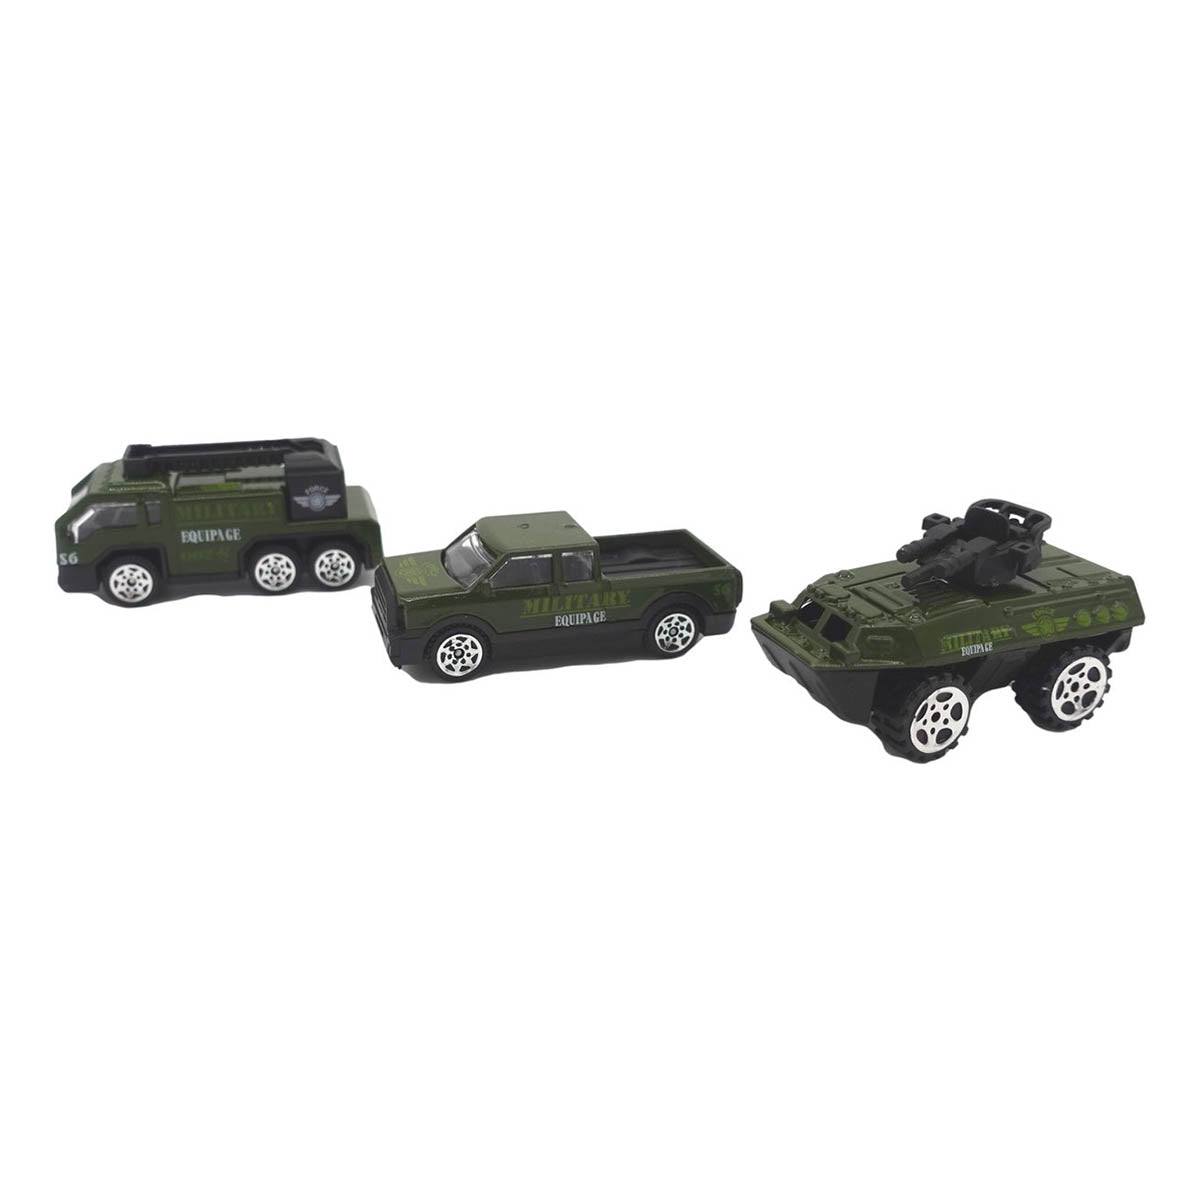 <tc>Ariko</tc> Military Garage Car - Toy vehicle - Including mini vehicles - With light and sound